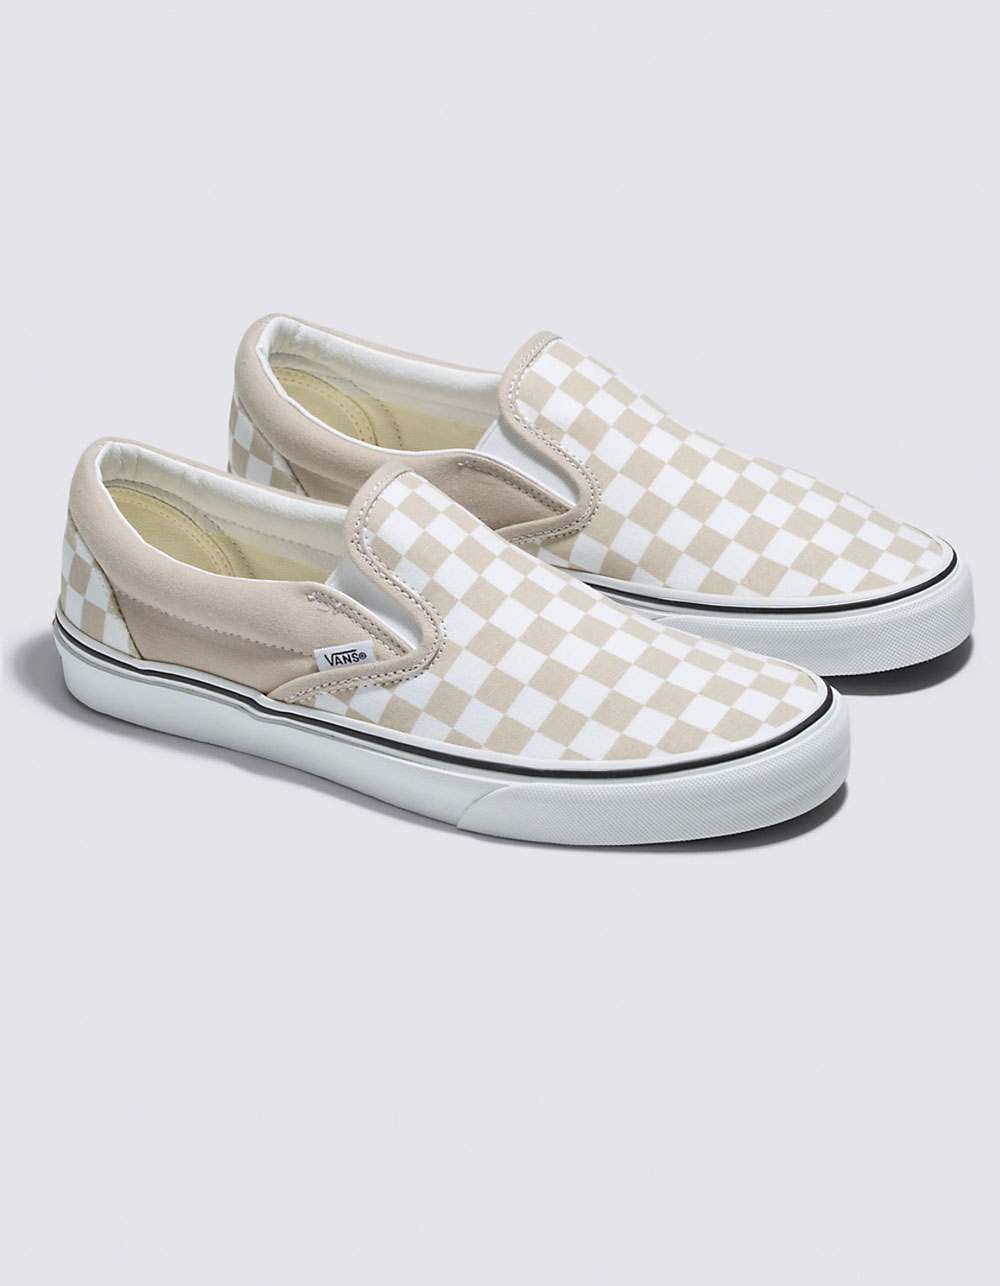 Vans Classic Slip-On Shoes